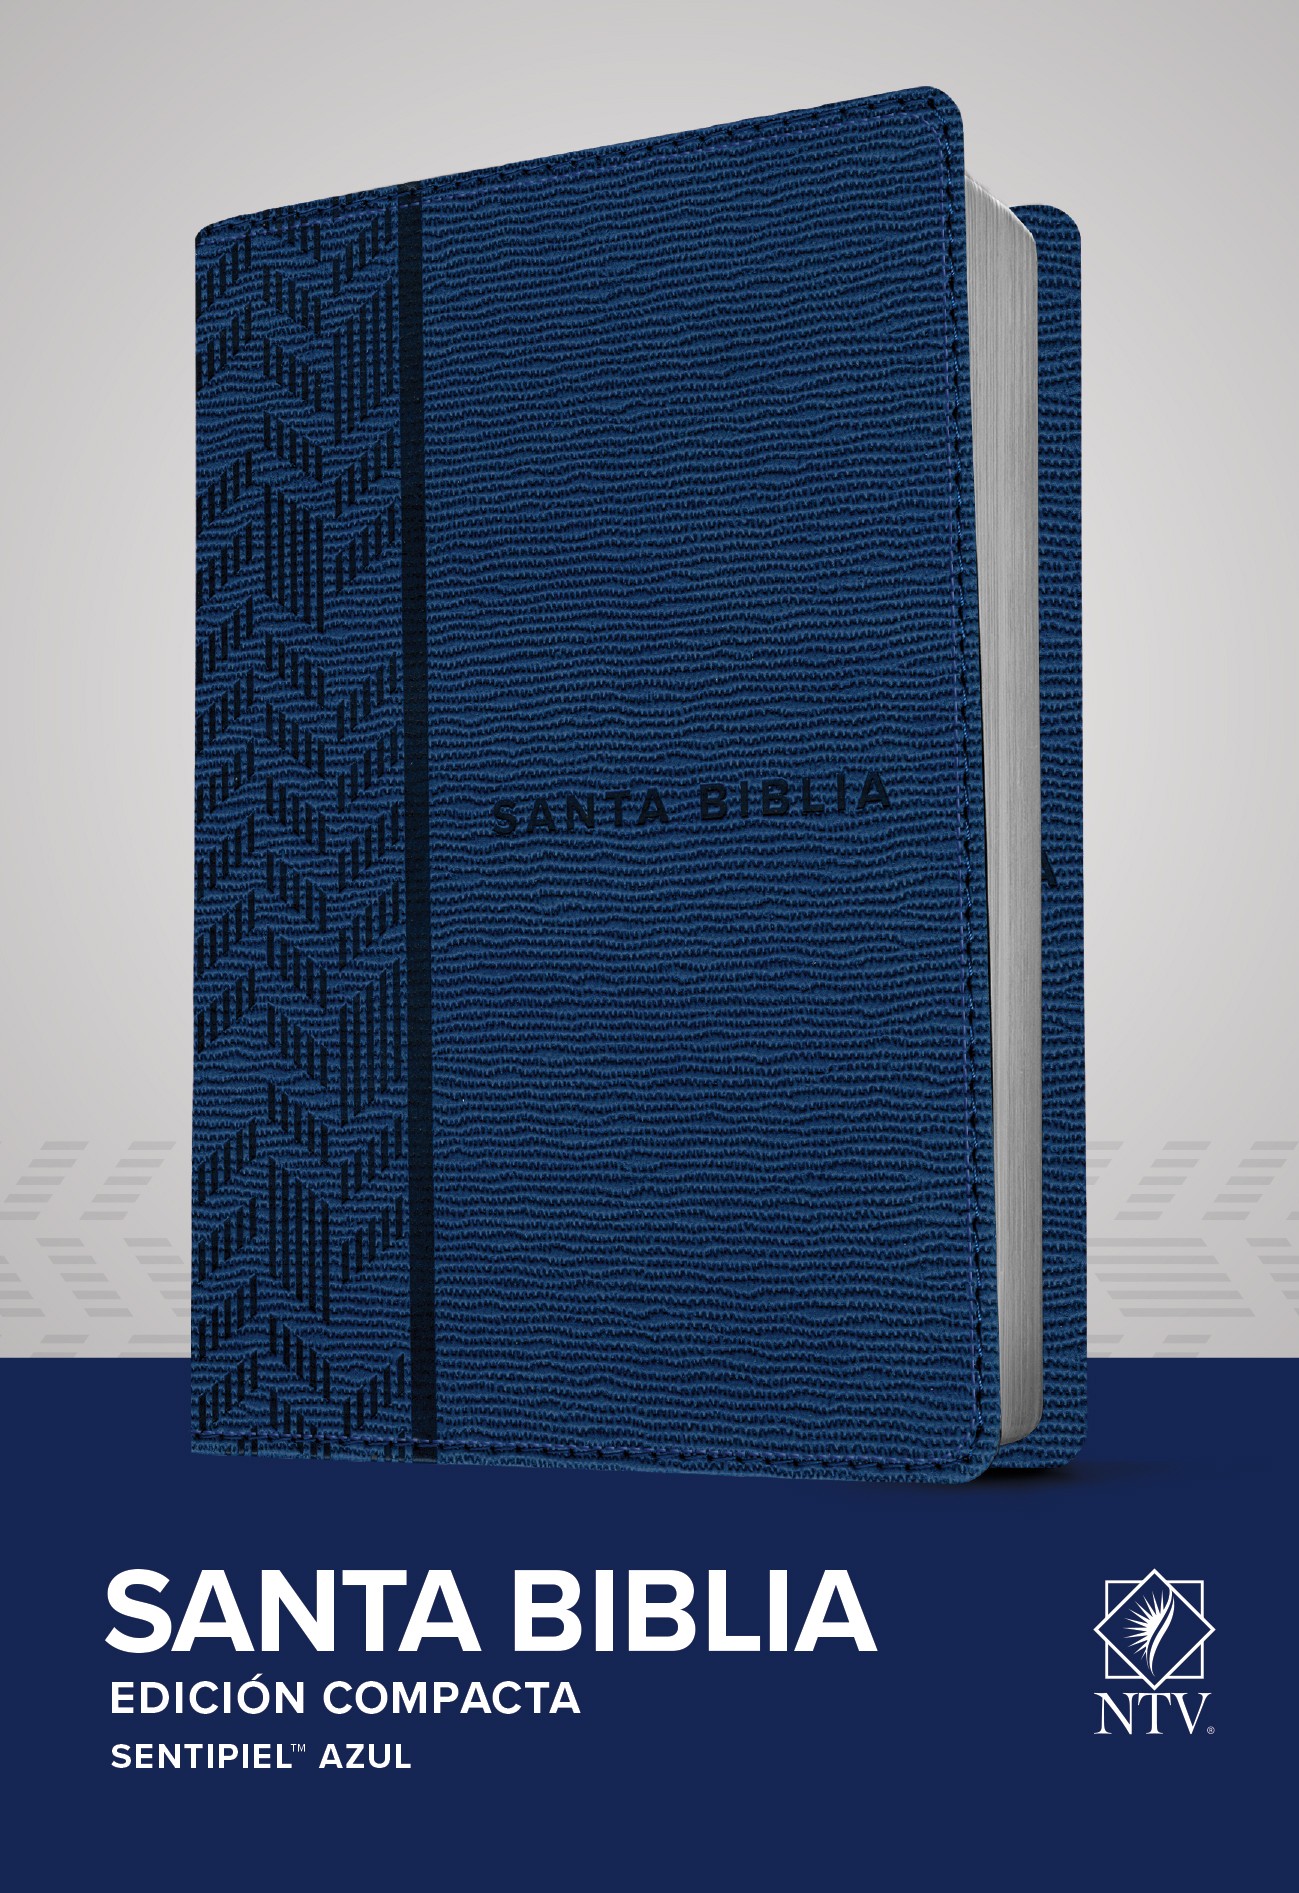  Santa Biblia NTV, Edición compacta (SentiPiel, Azul)